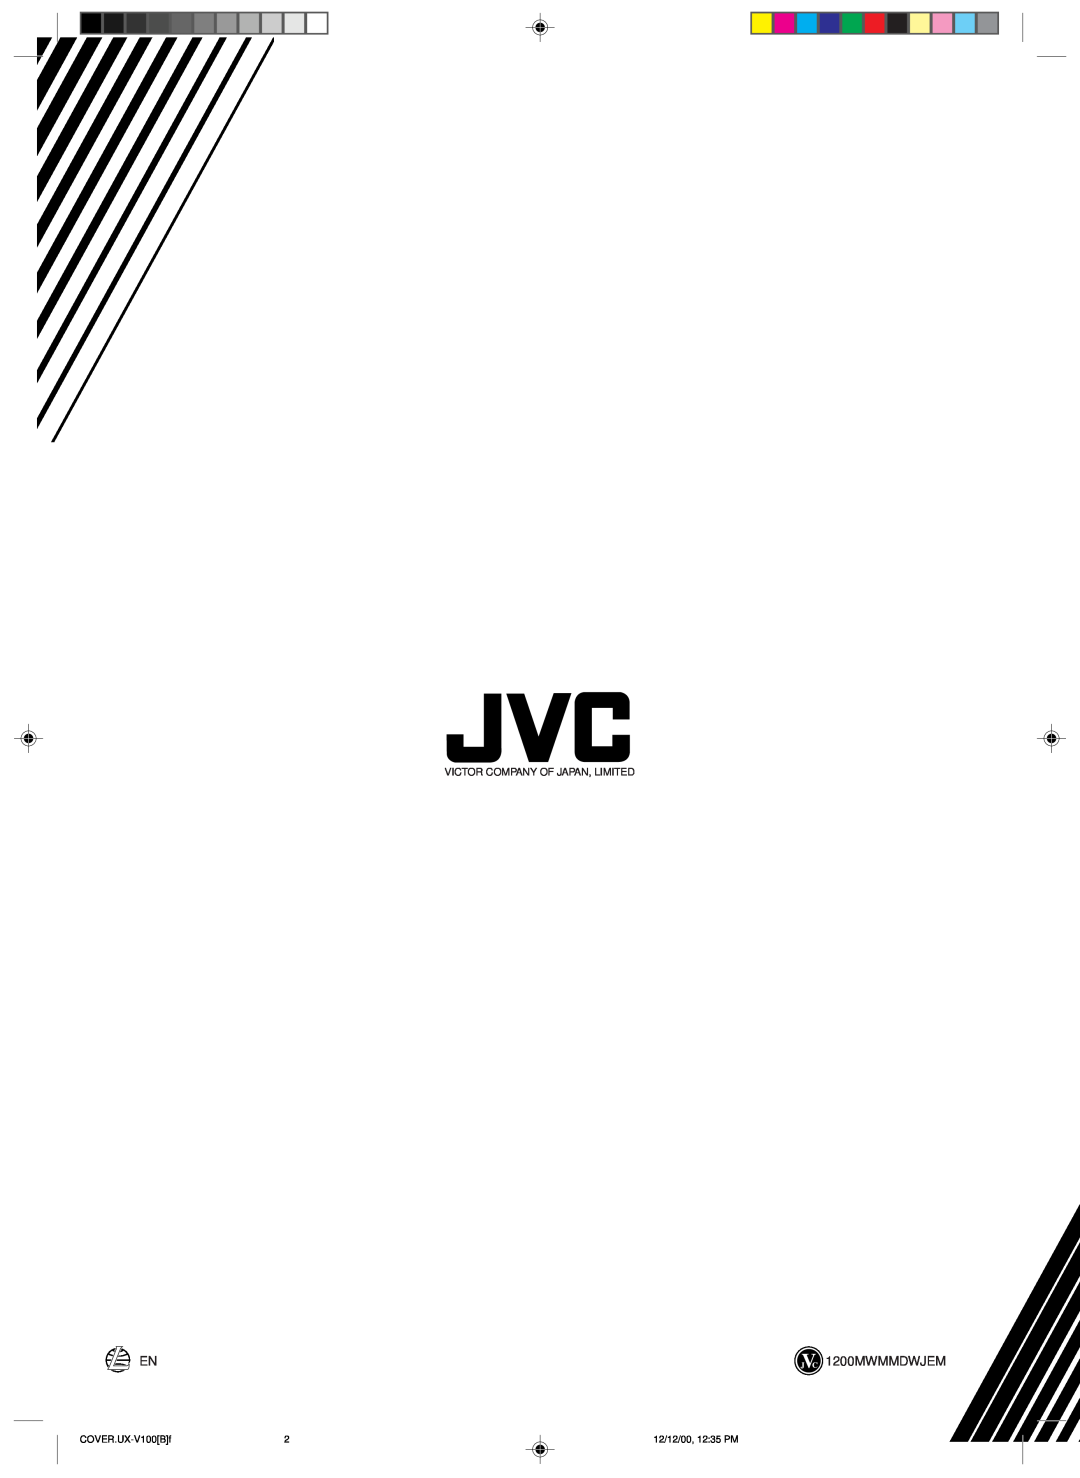 JVC 20981IEN manual 1200MWMMDWJEM, Victor Company Of Japan, Limited, COVER.UX-V100Bf, 12/12/00, 12 35 PM 